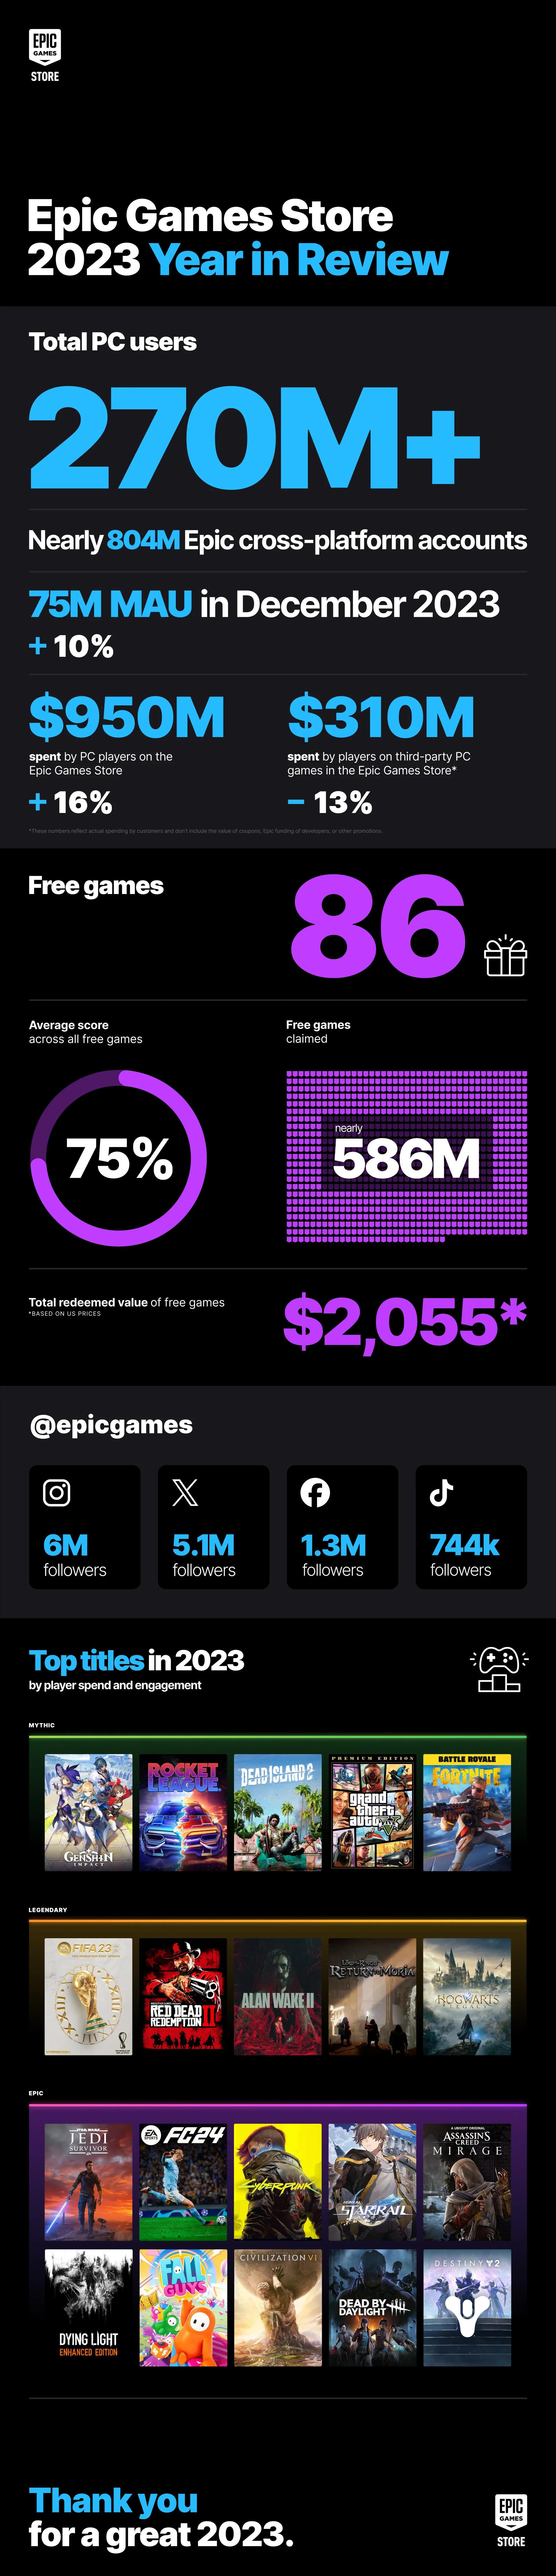 Epic Games подвела итоги работы магазина EGS за 2023 год - фото 1